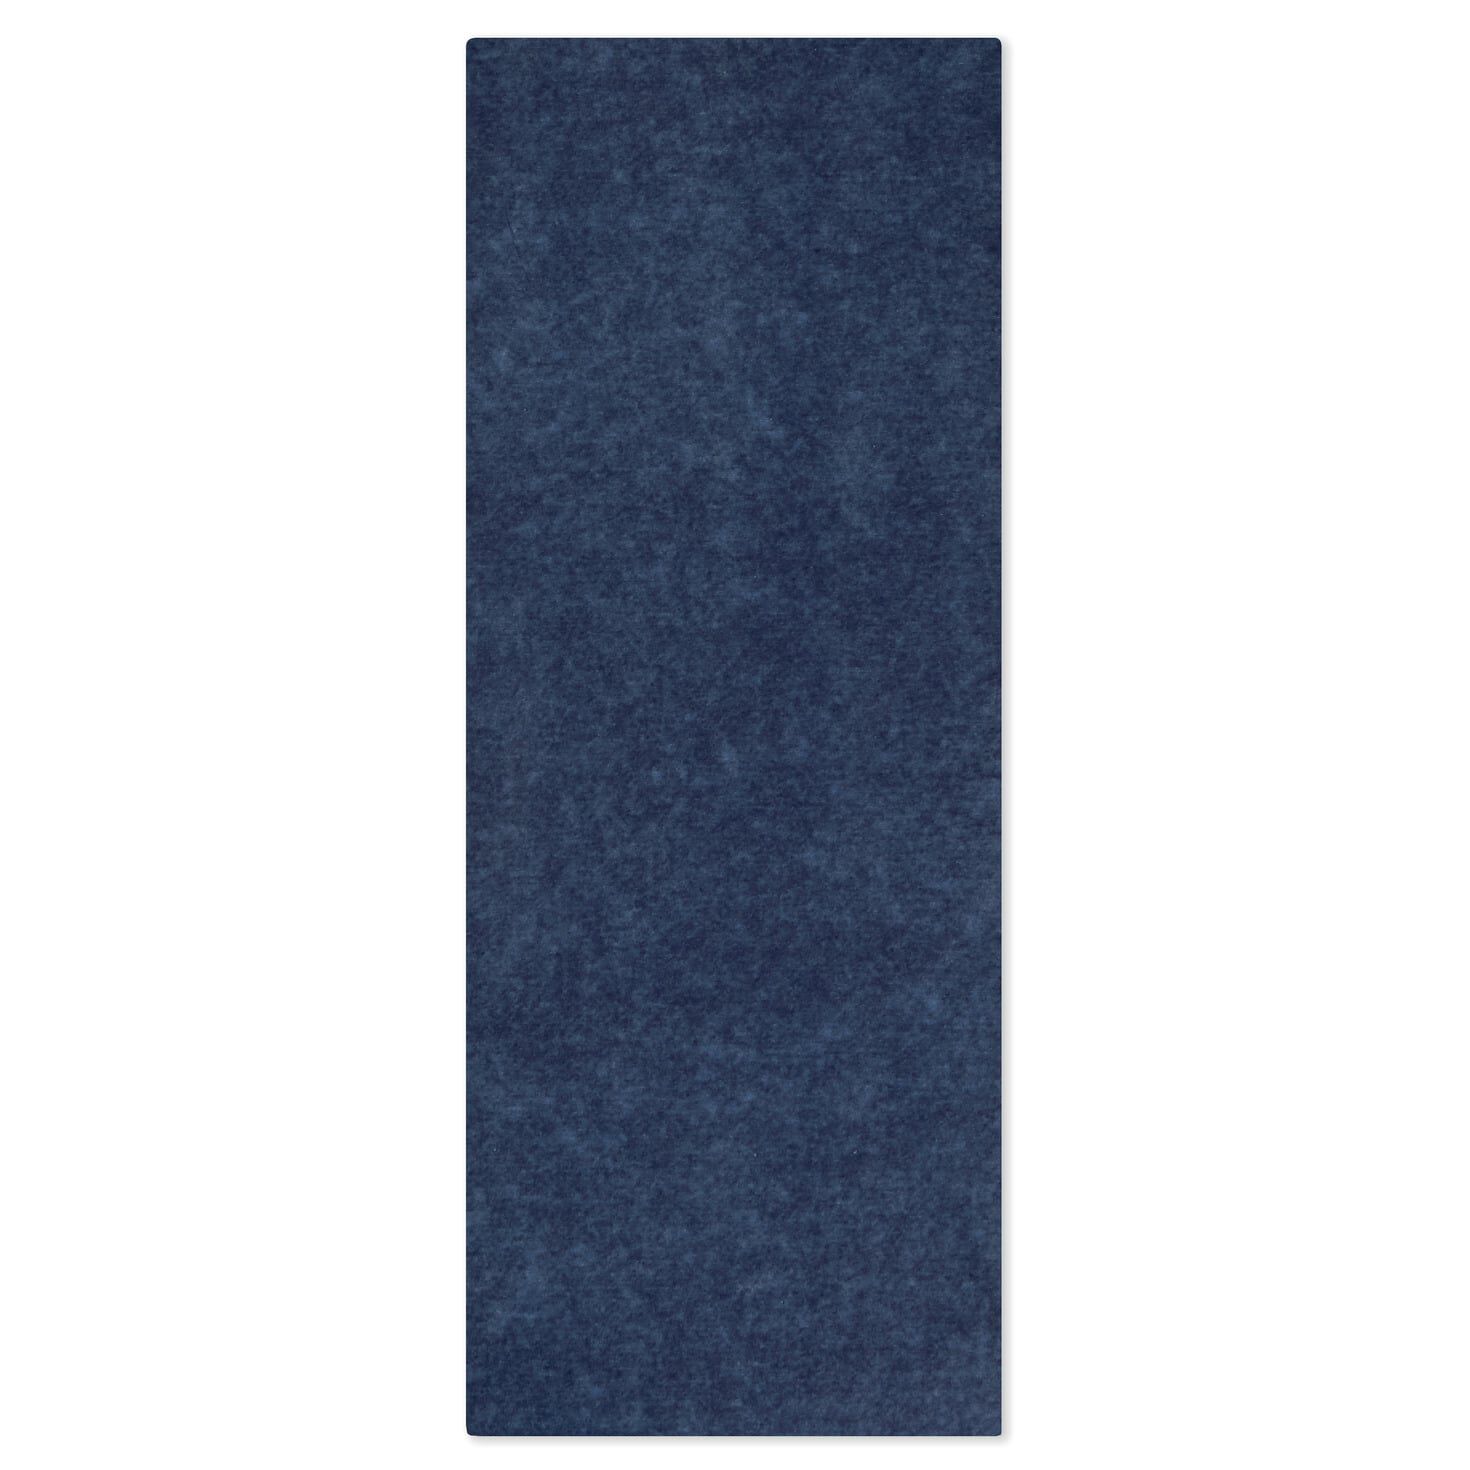  JAM PAPER Tissue Paper - Navy Blue - 10 Sheets/Pack : Health &  Household